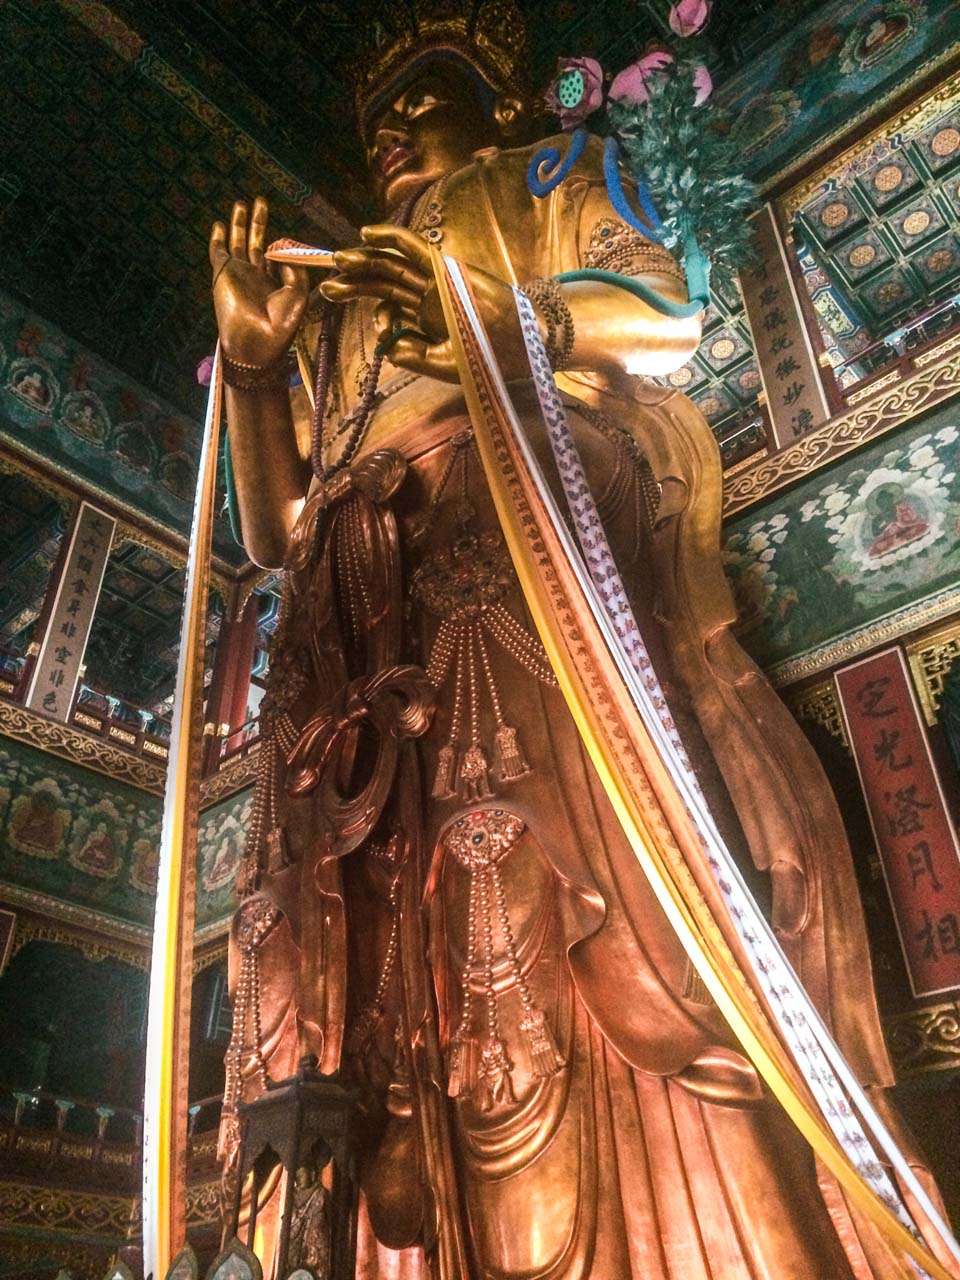 A giant Maitreya Buddha statue at the Yonghegong Lama Temple in Beijing, China